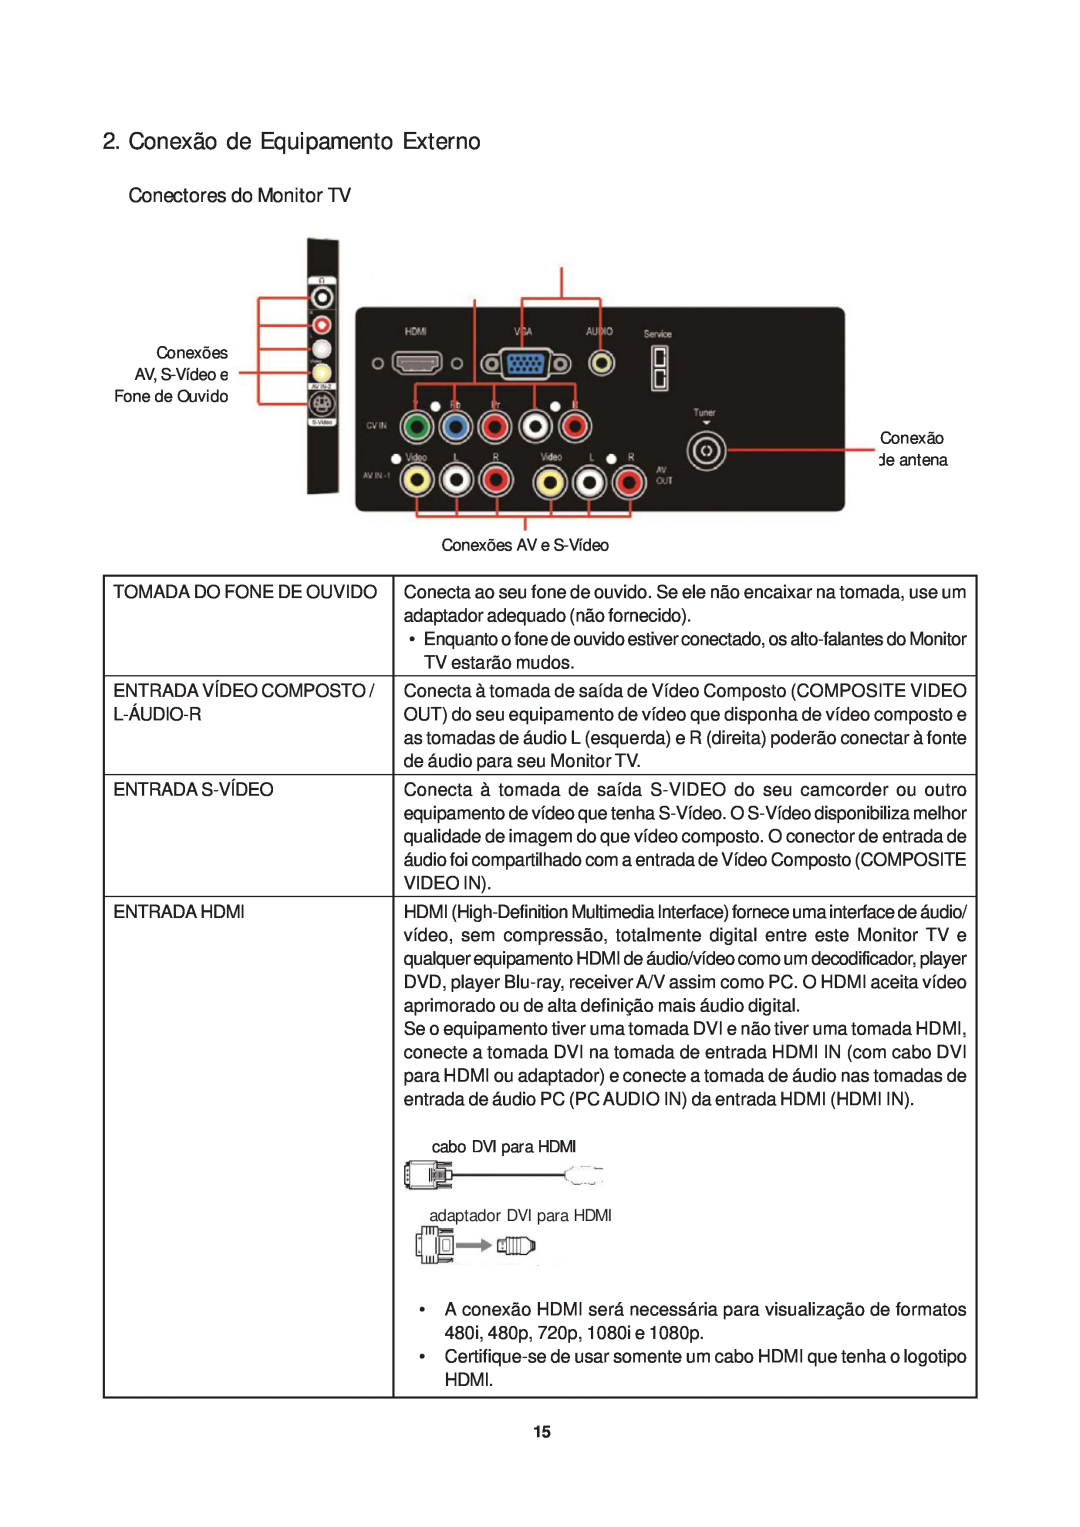 AOC T2242WE, T942WE, T2442E manual Conexão de Equipamento Externo, Conectores do Monitor TV 